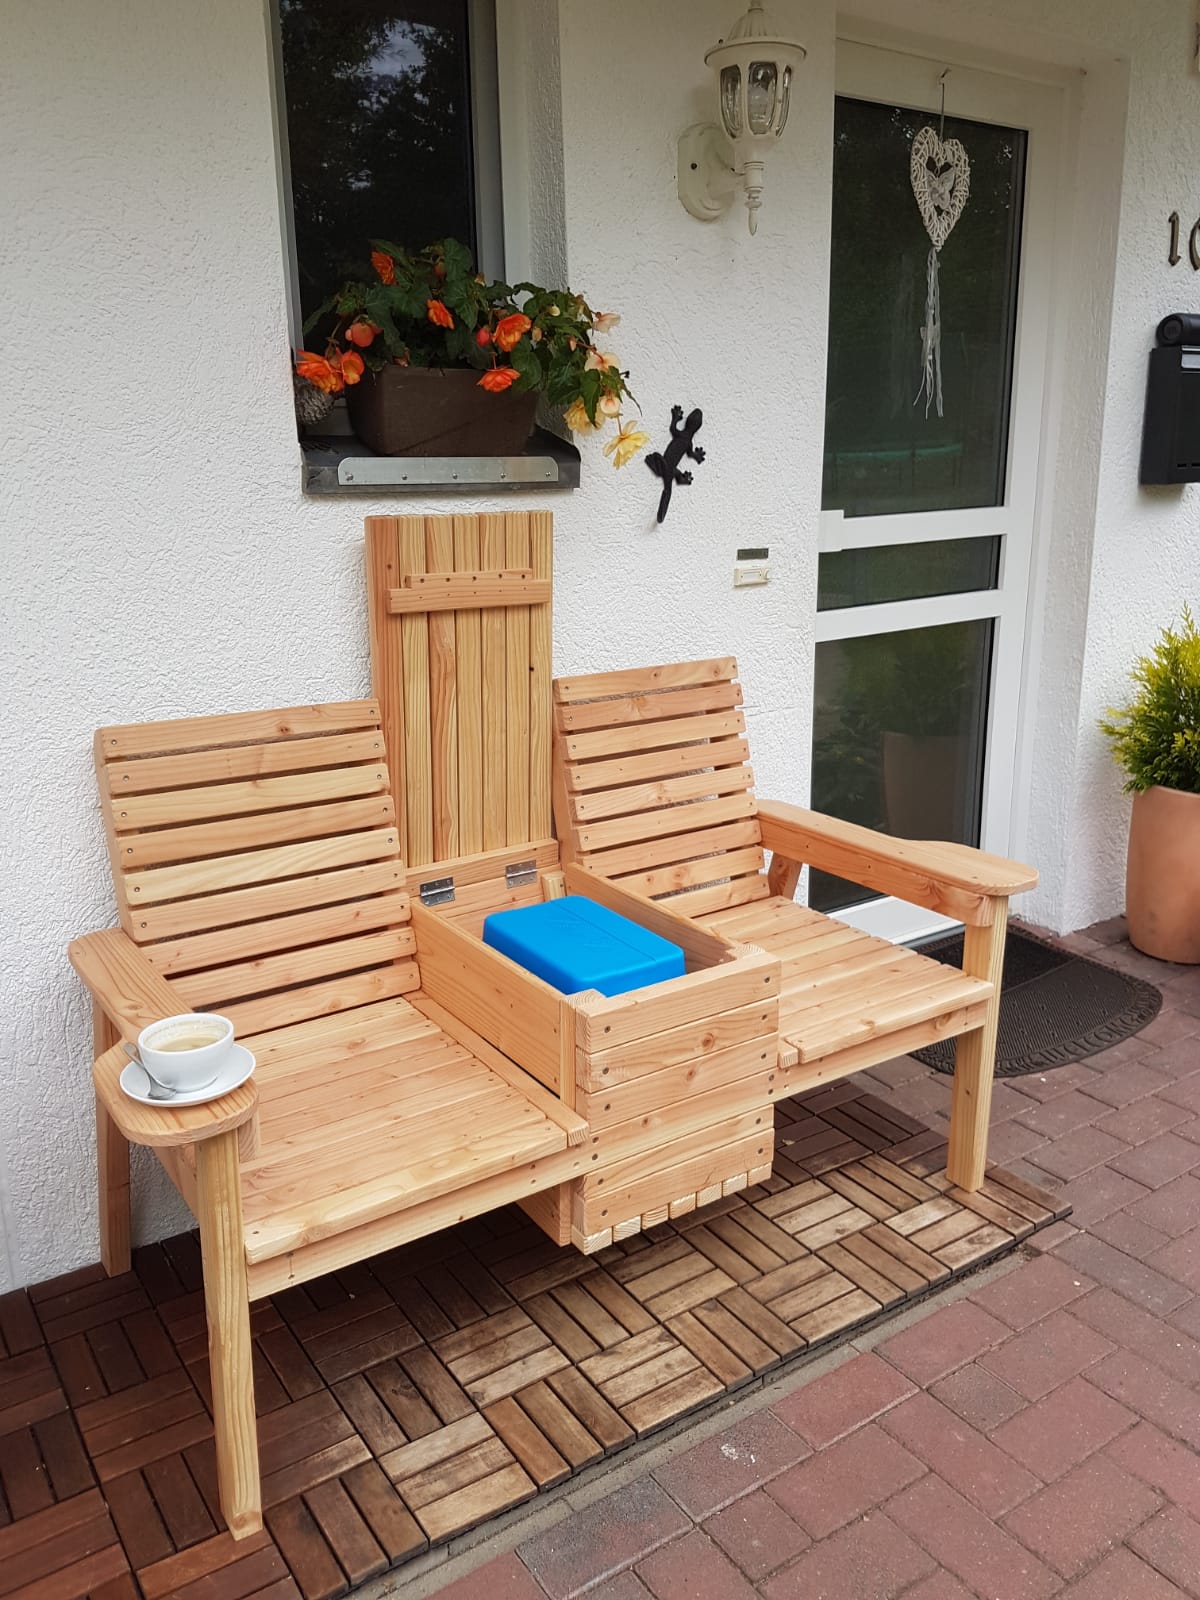 DIY Double Chair Bench with Cooler | MyOutdoorPlans | Free ...